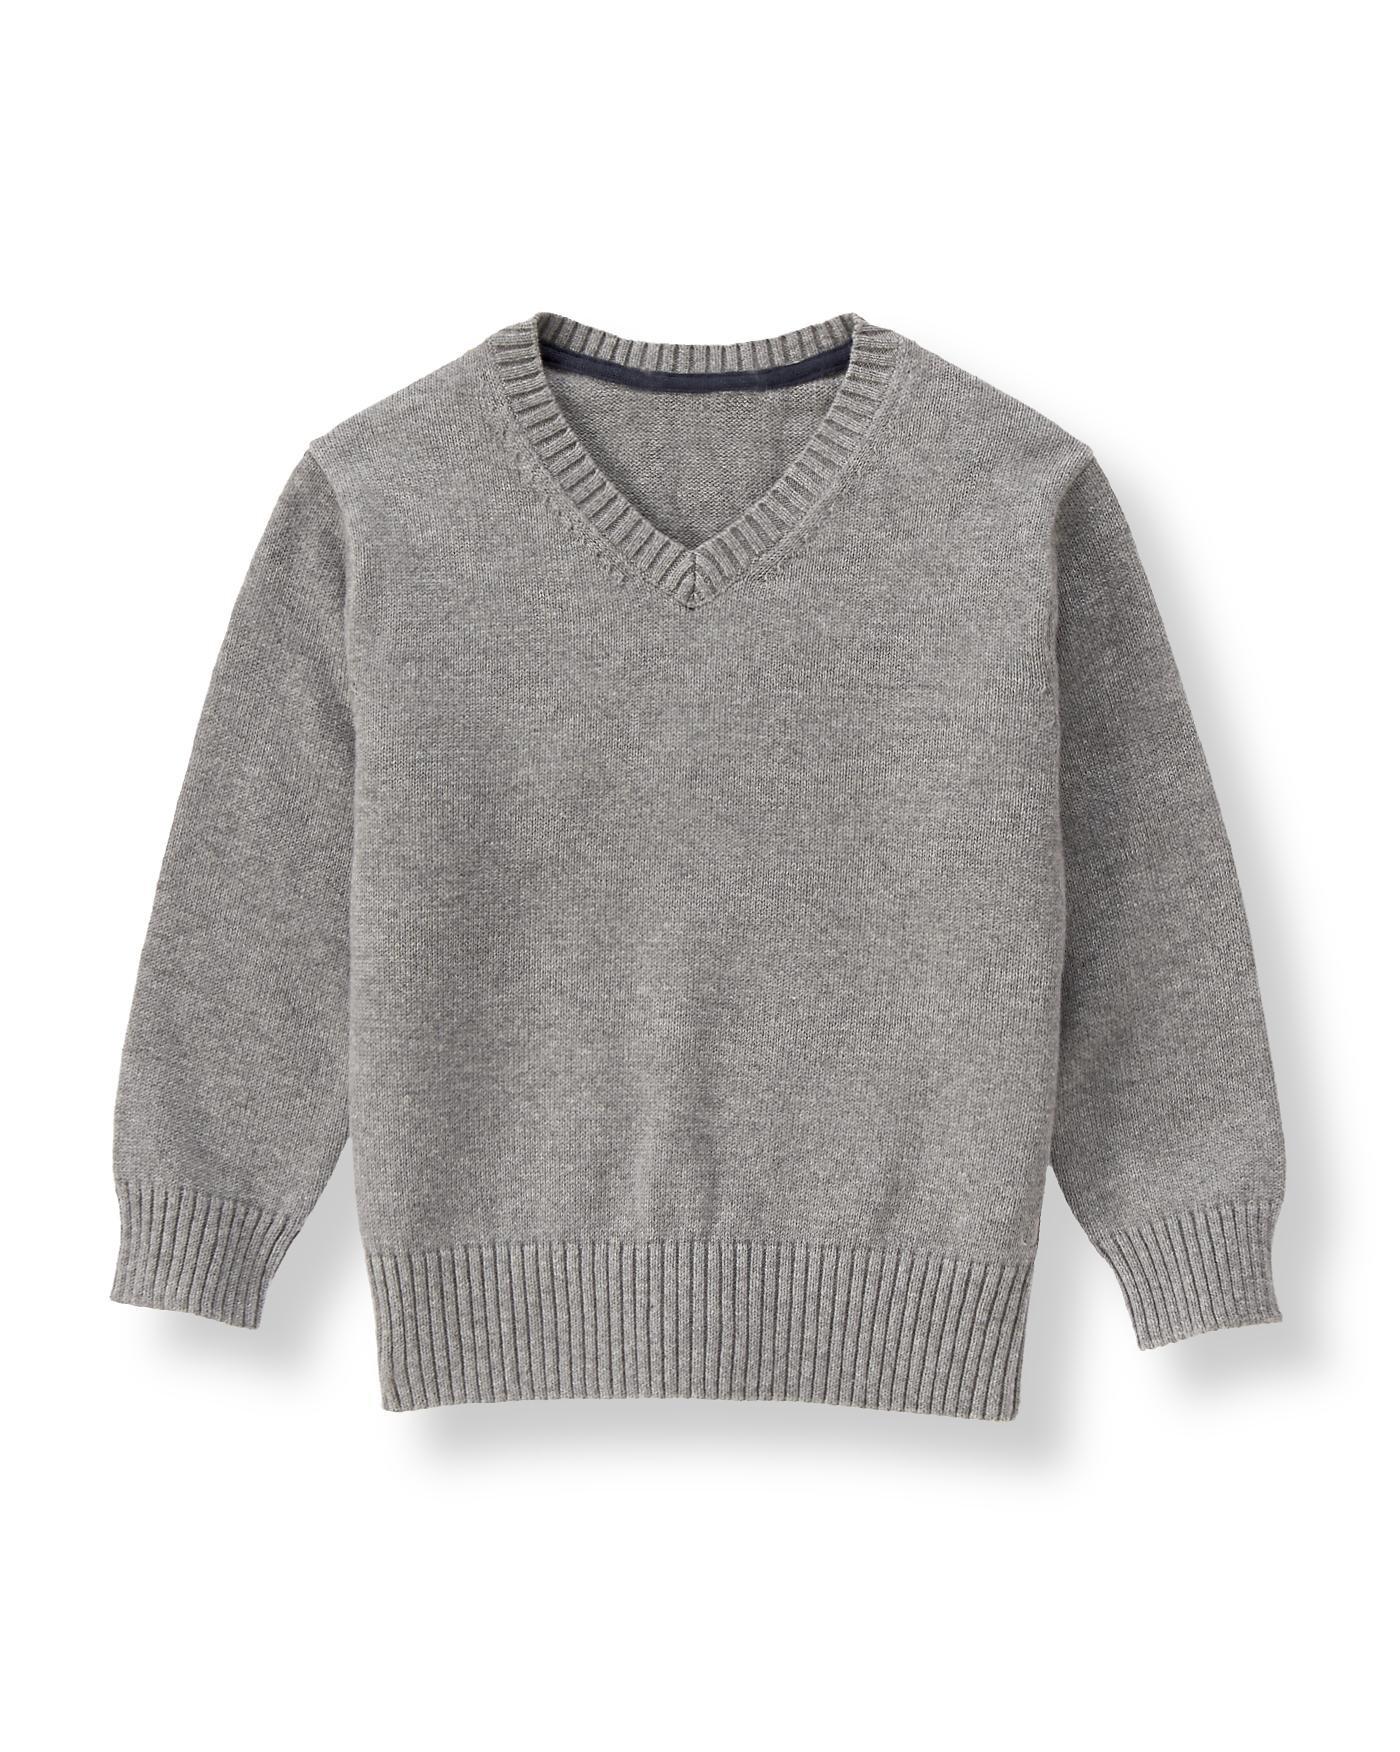 Grey V-Neck Sweater at JanieandJack